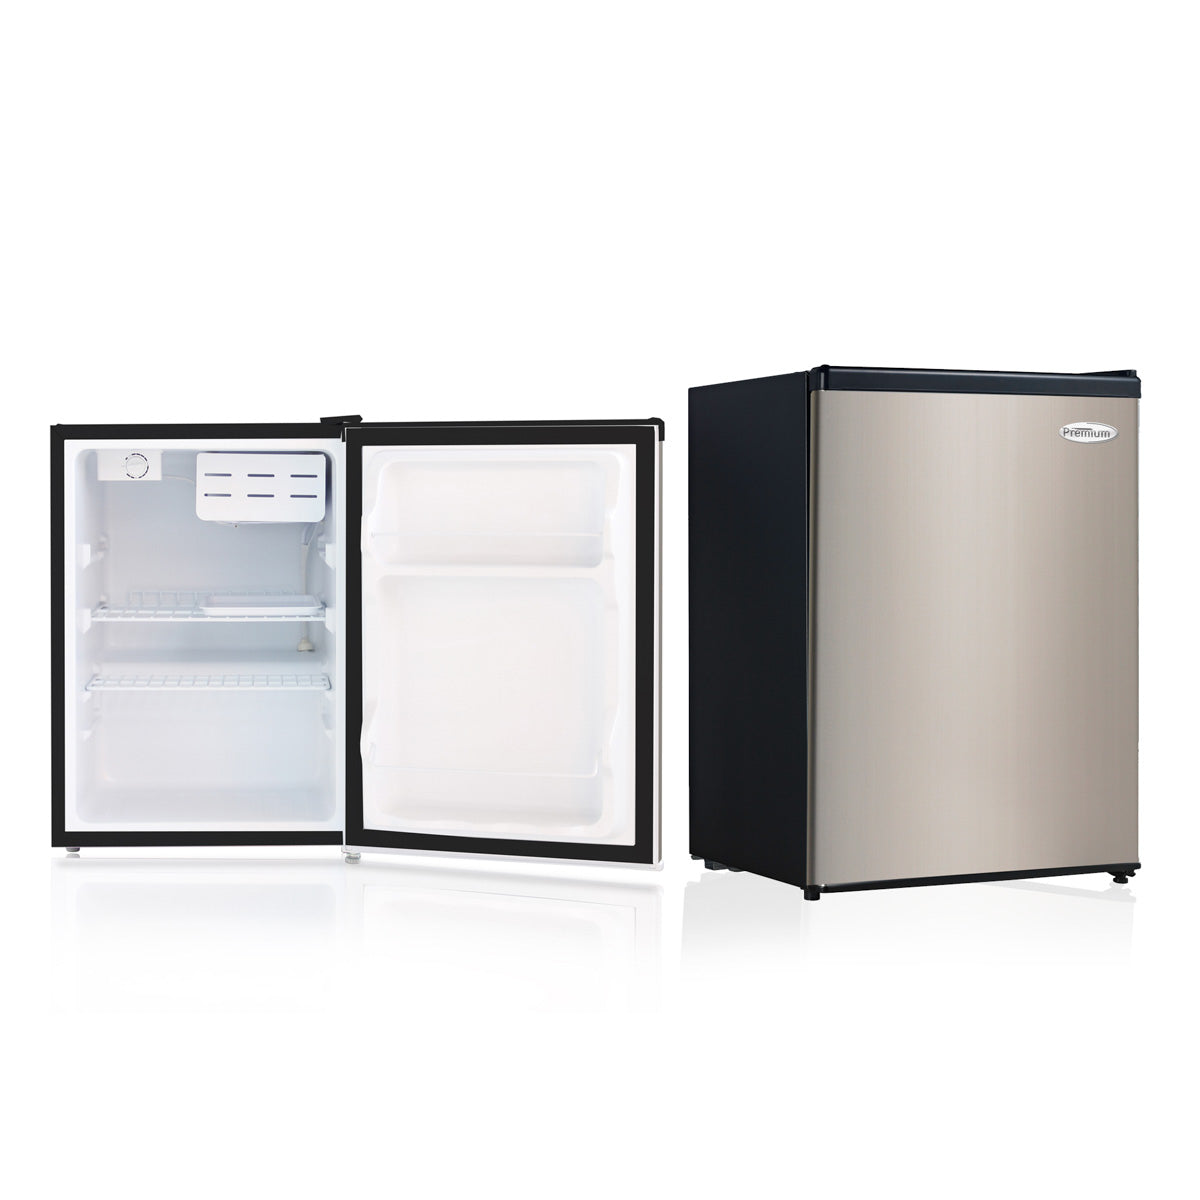 Premium - 17.5" Stainless Steel 2.4 CuFt Compact Refrigerator